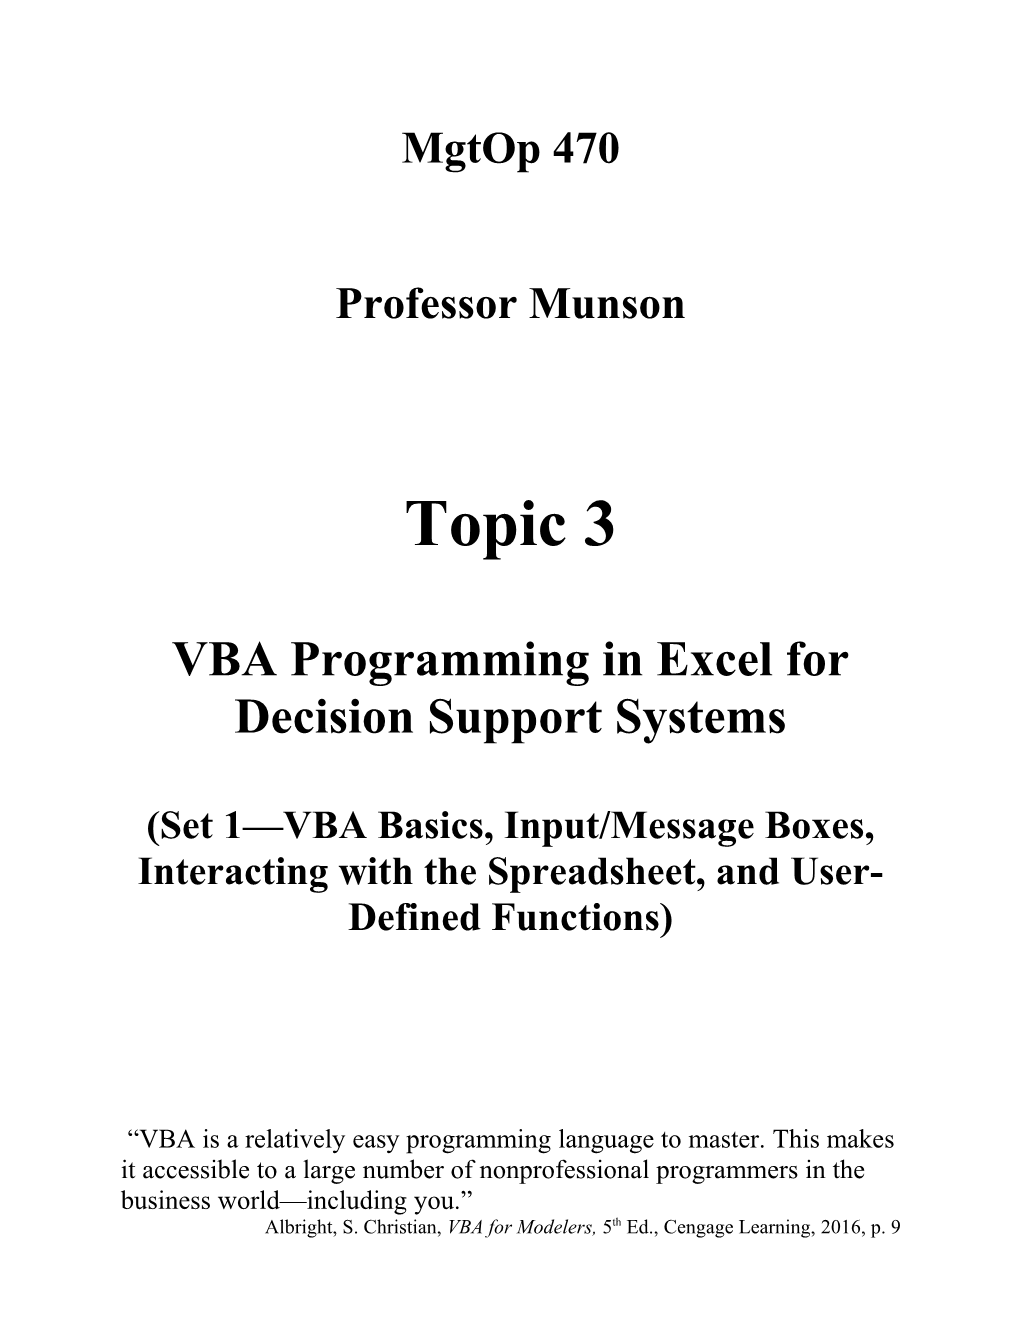 VBA Programming in Excel For